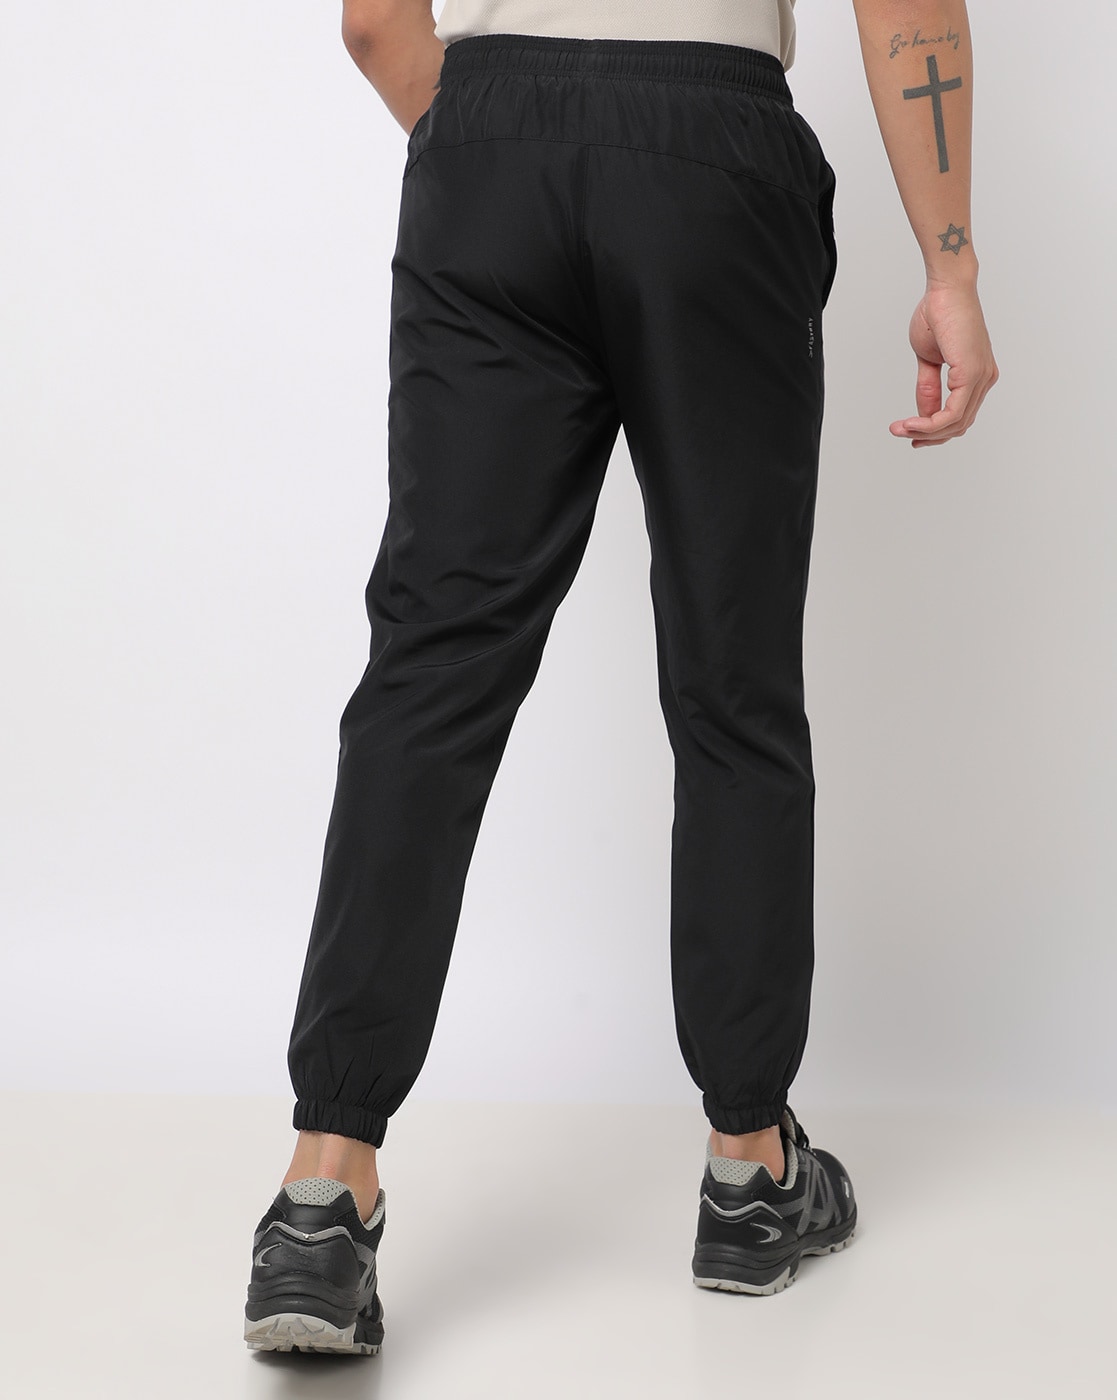 Buy Olive Green Track Pants for Men by Teamspirit Online | Ajio.com